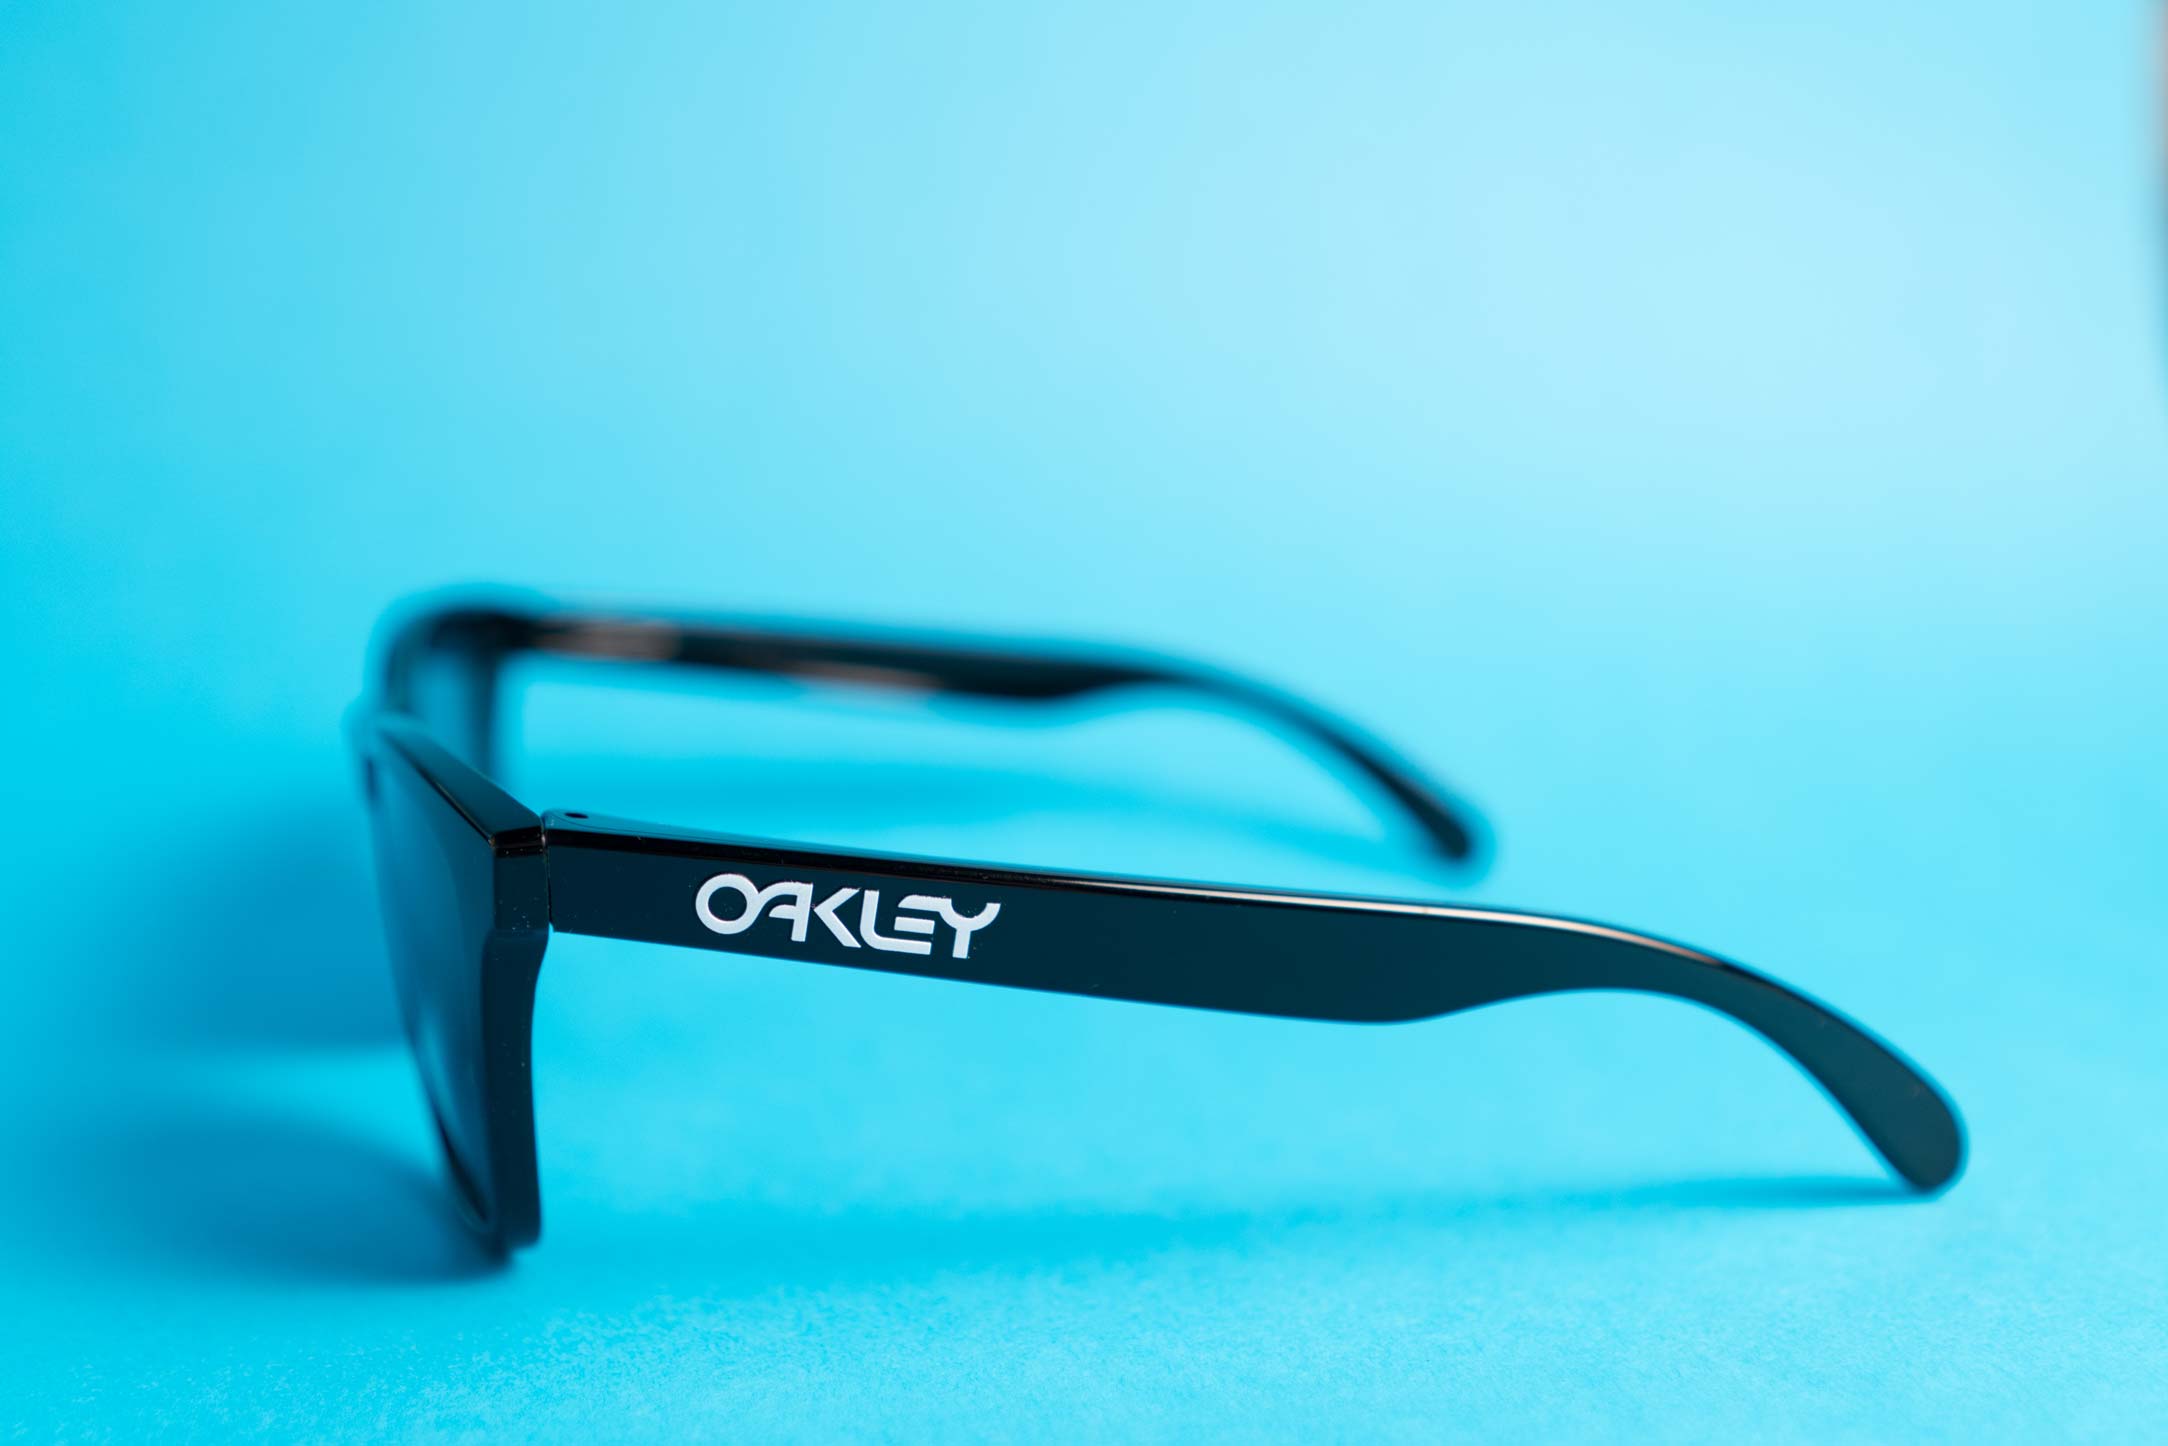 real oakley sunglasses